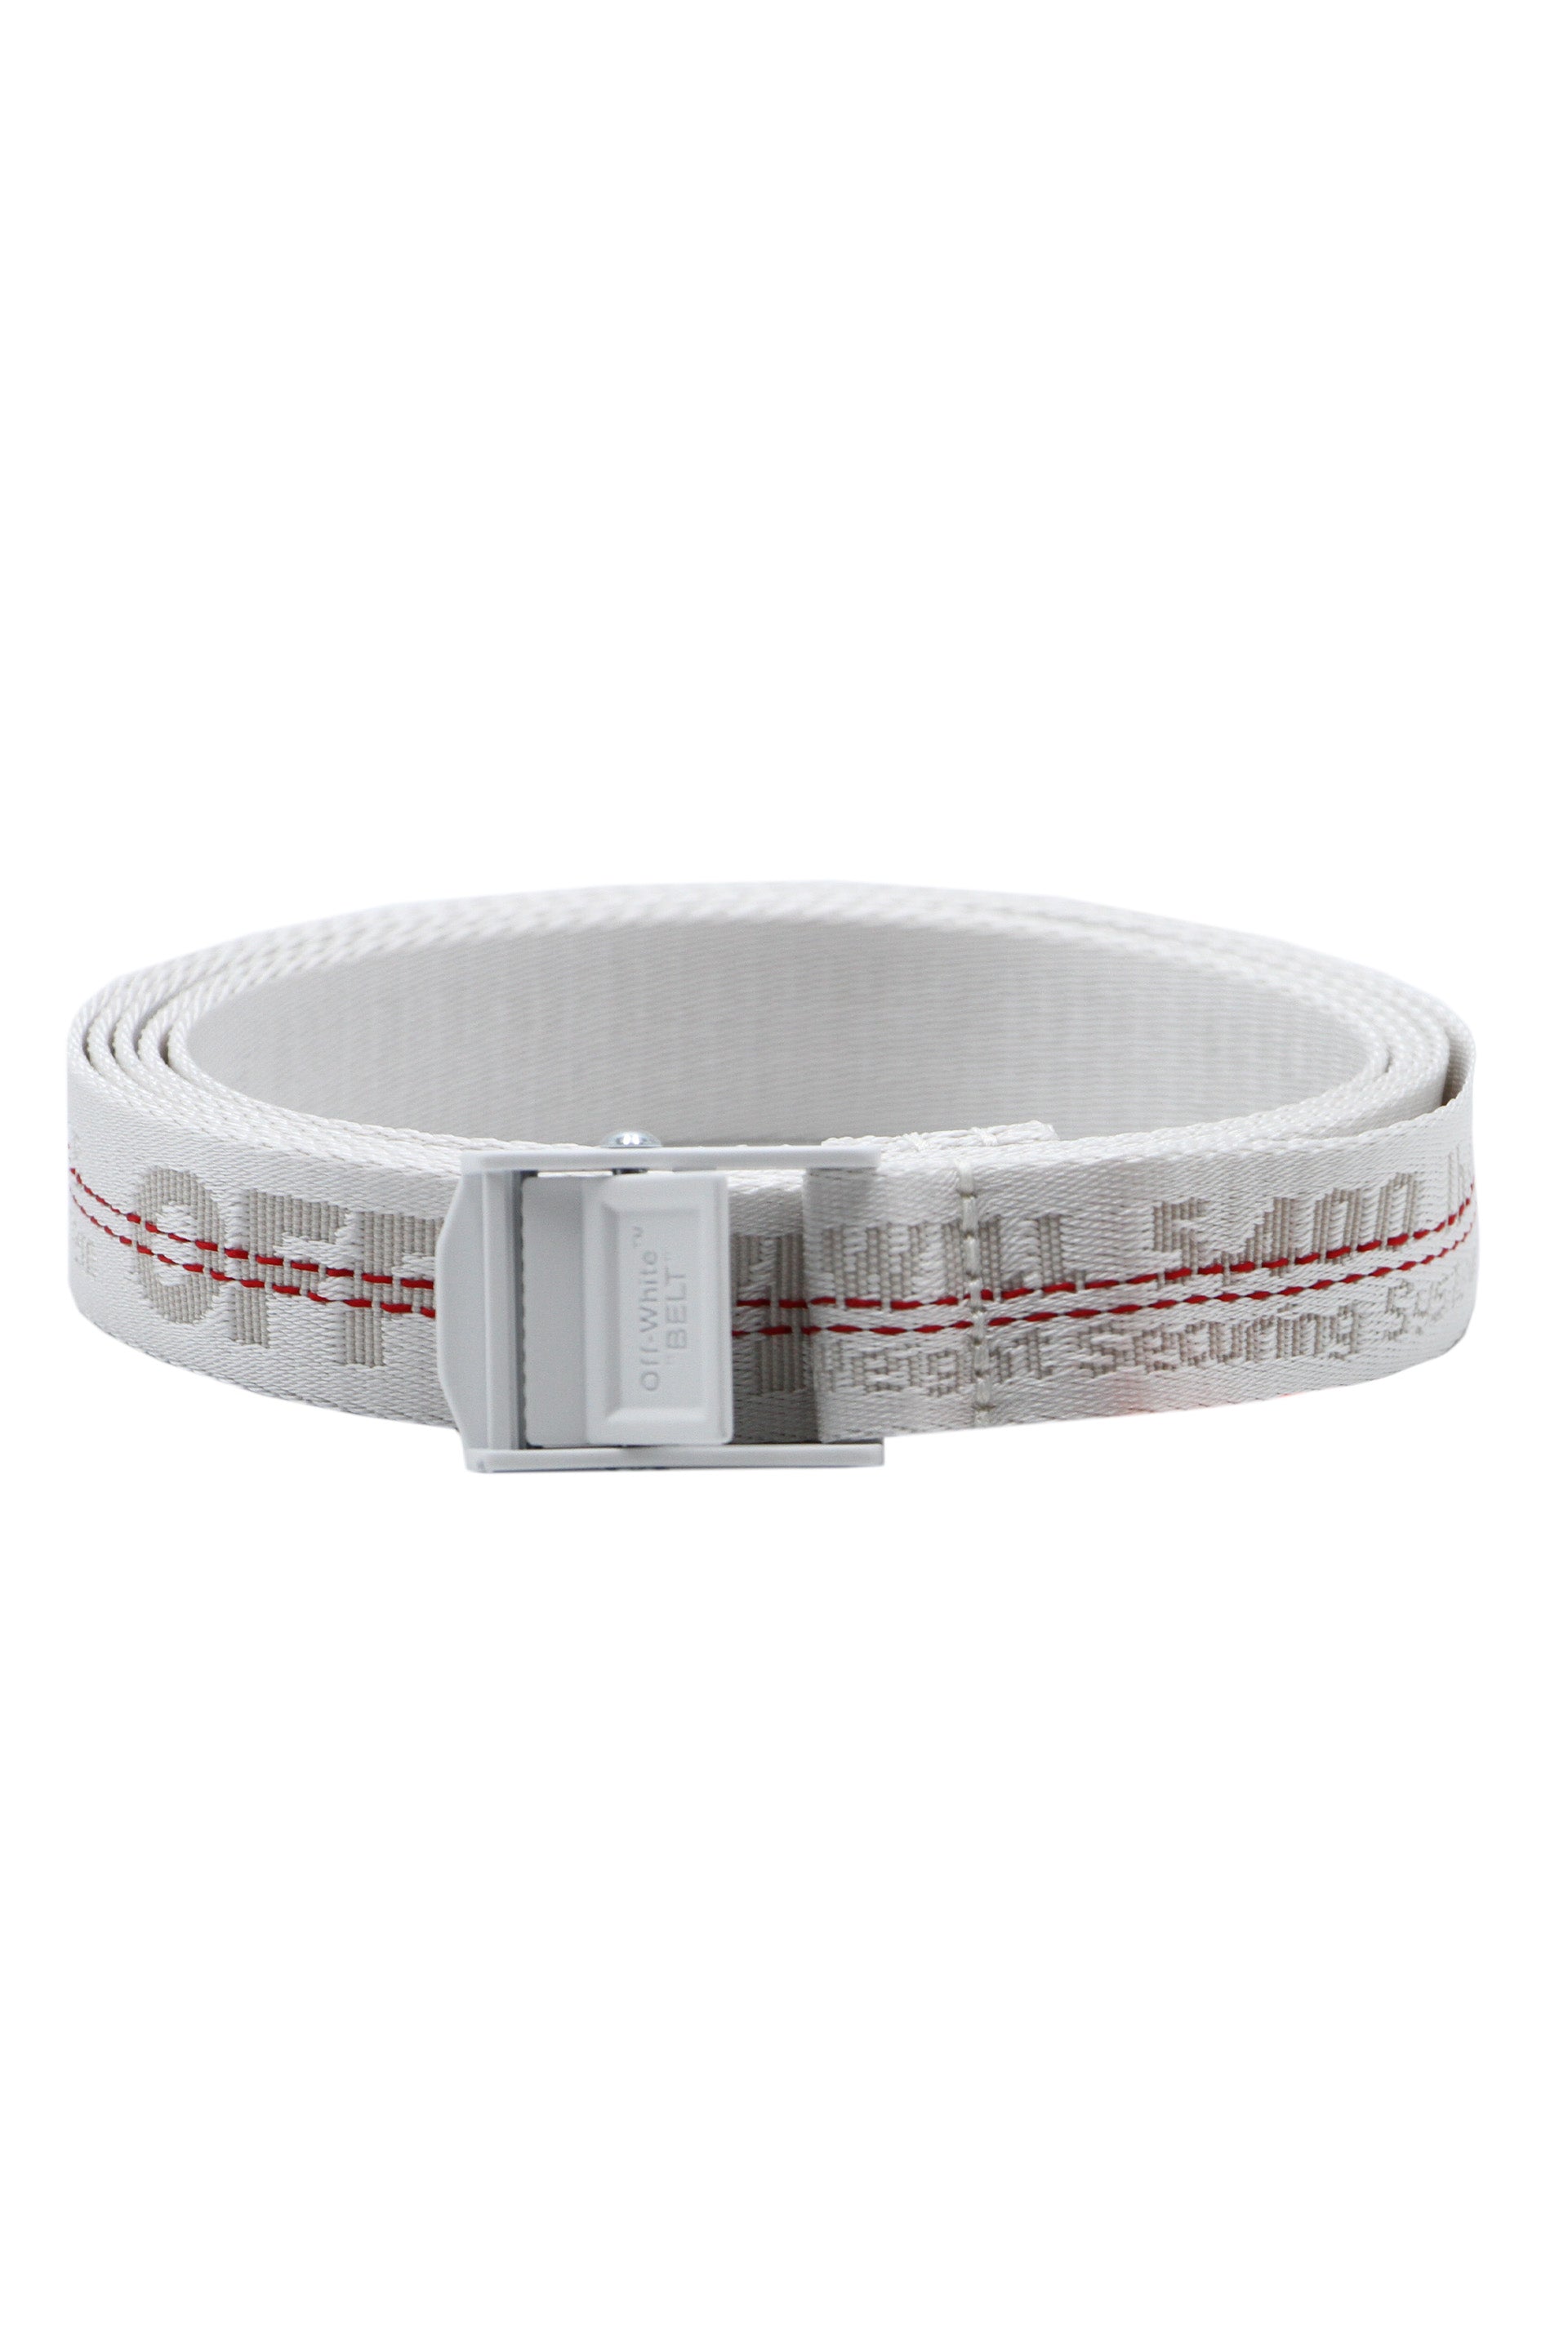 Mini Industrial fabric belt with logo